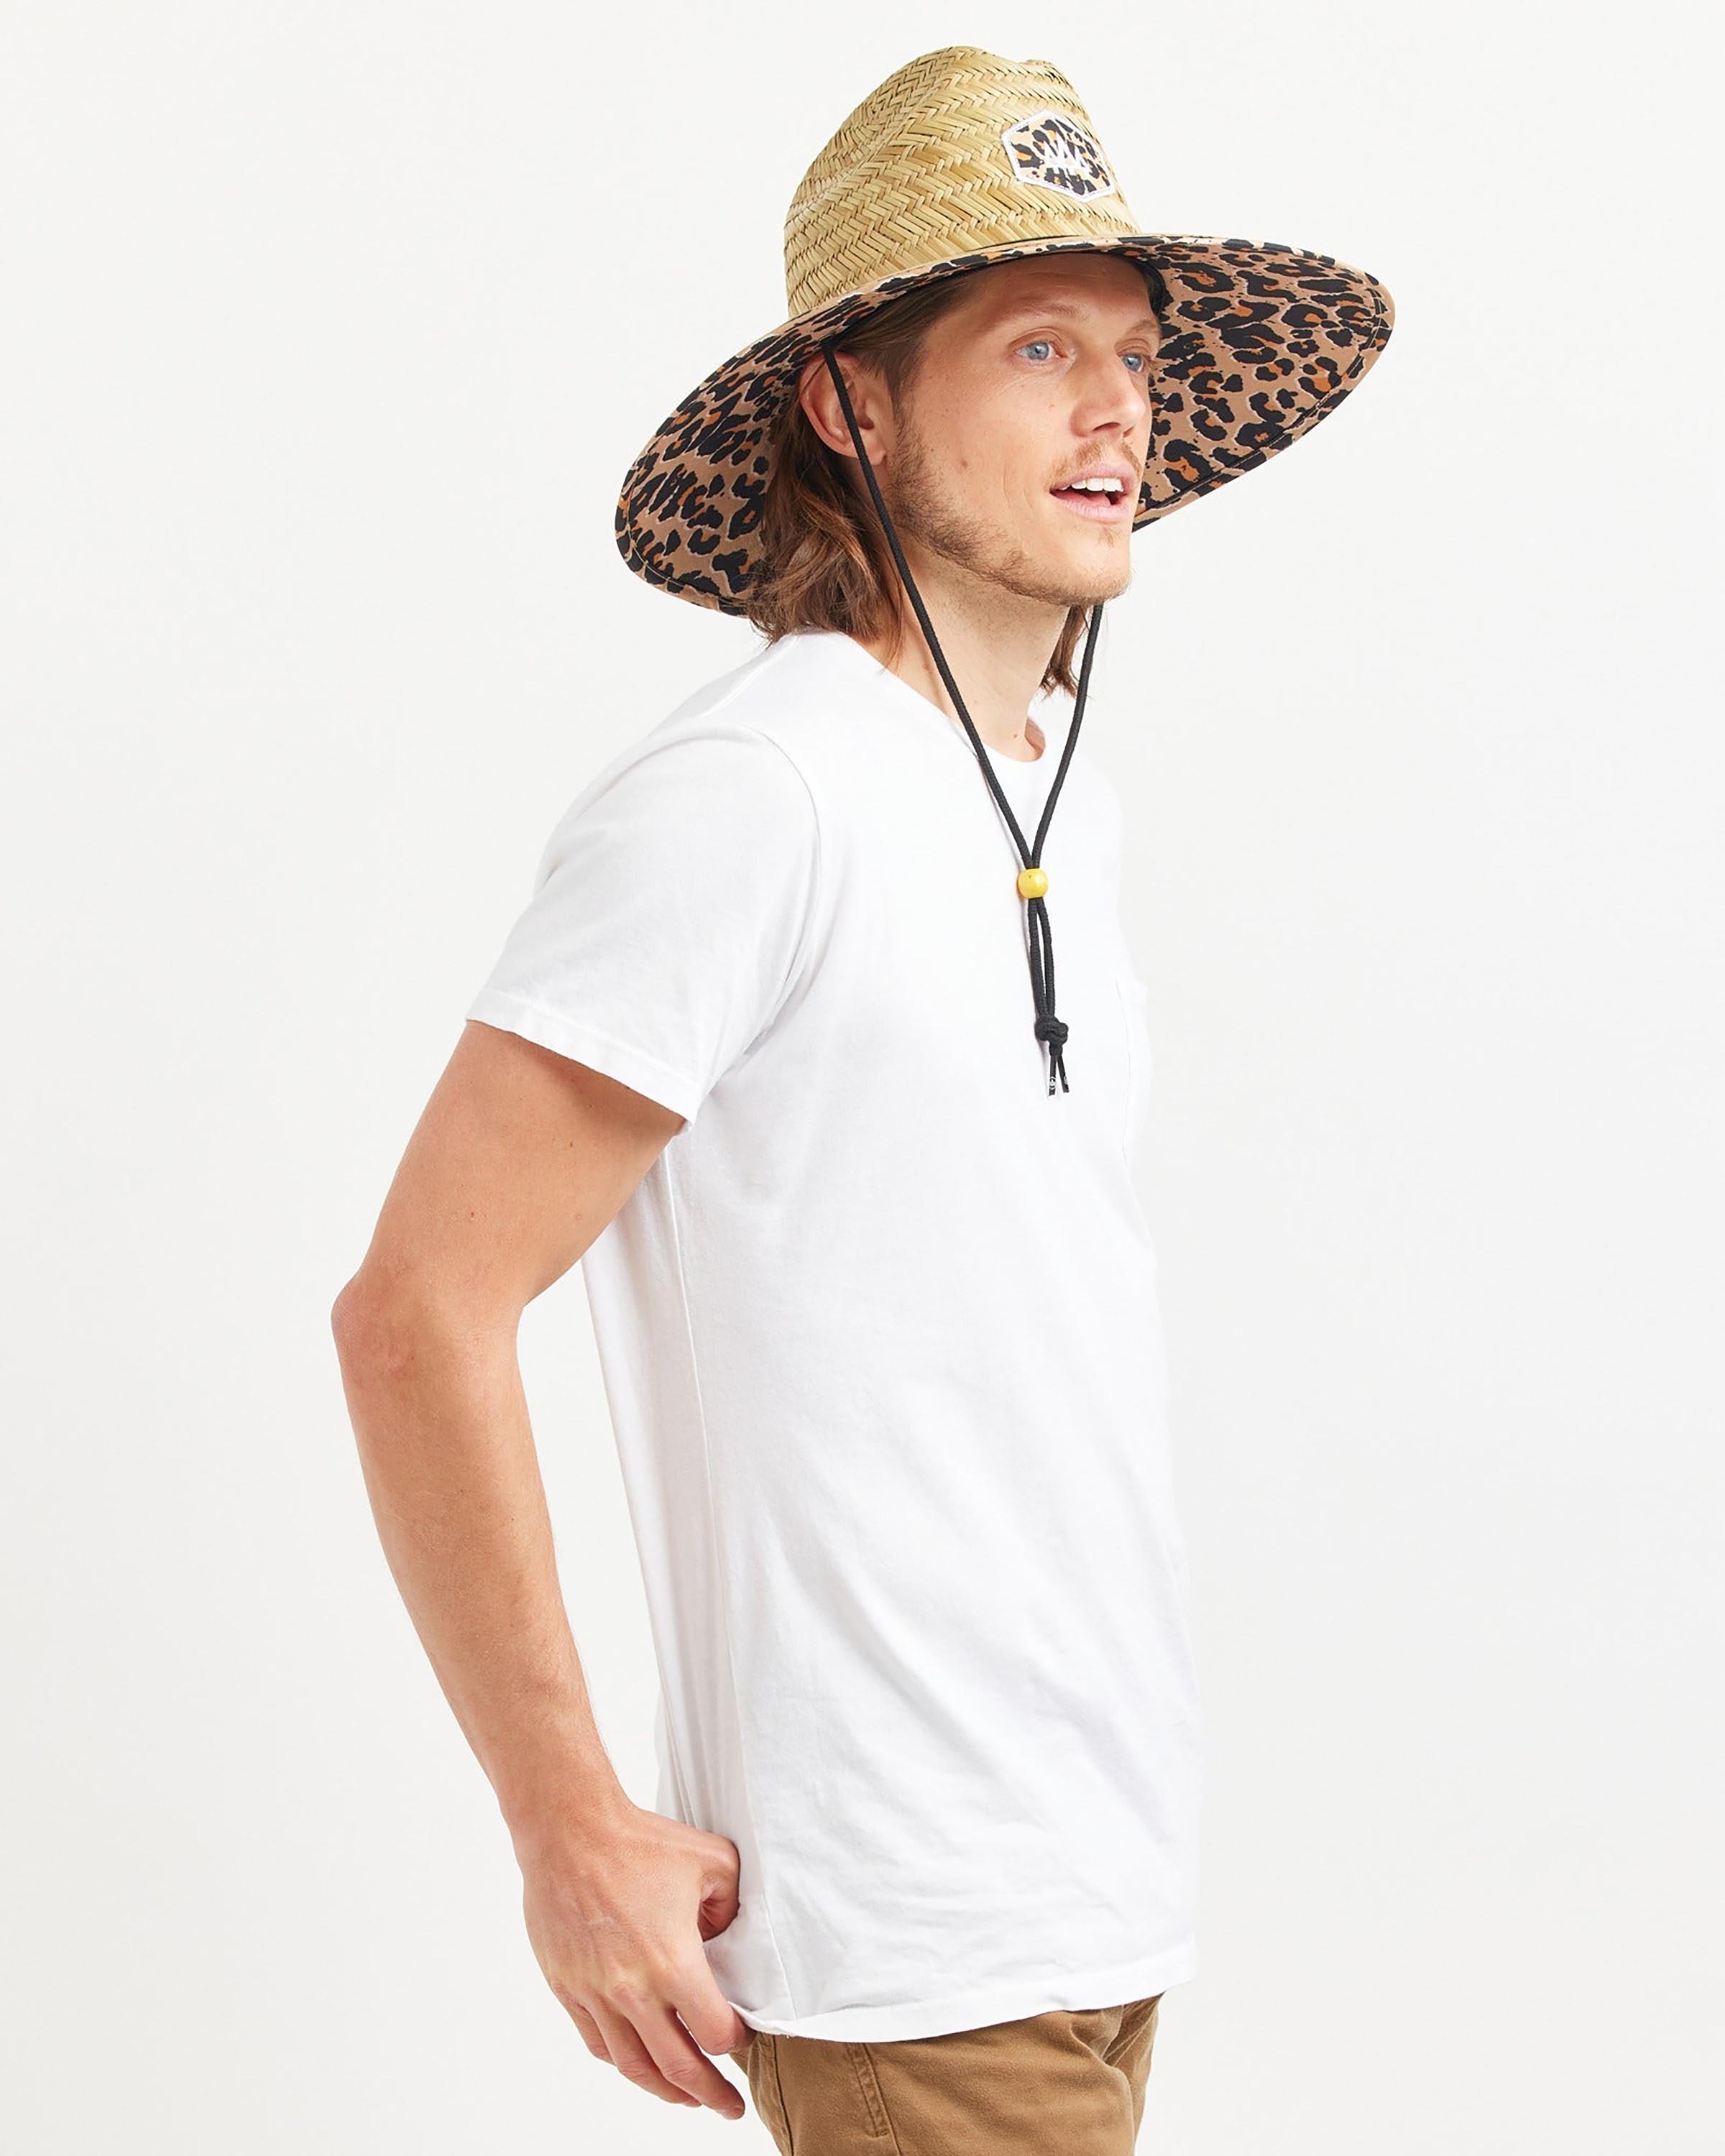 Hemlock male model looking right wearing Big Cat straw lifeguard hat with Classic Leopard pattern